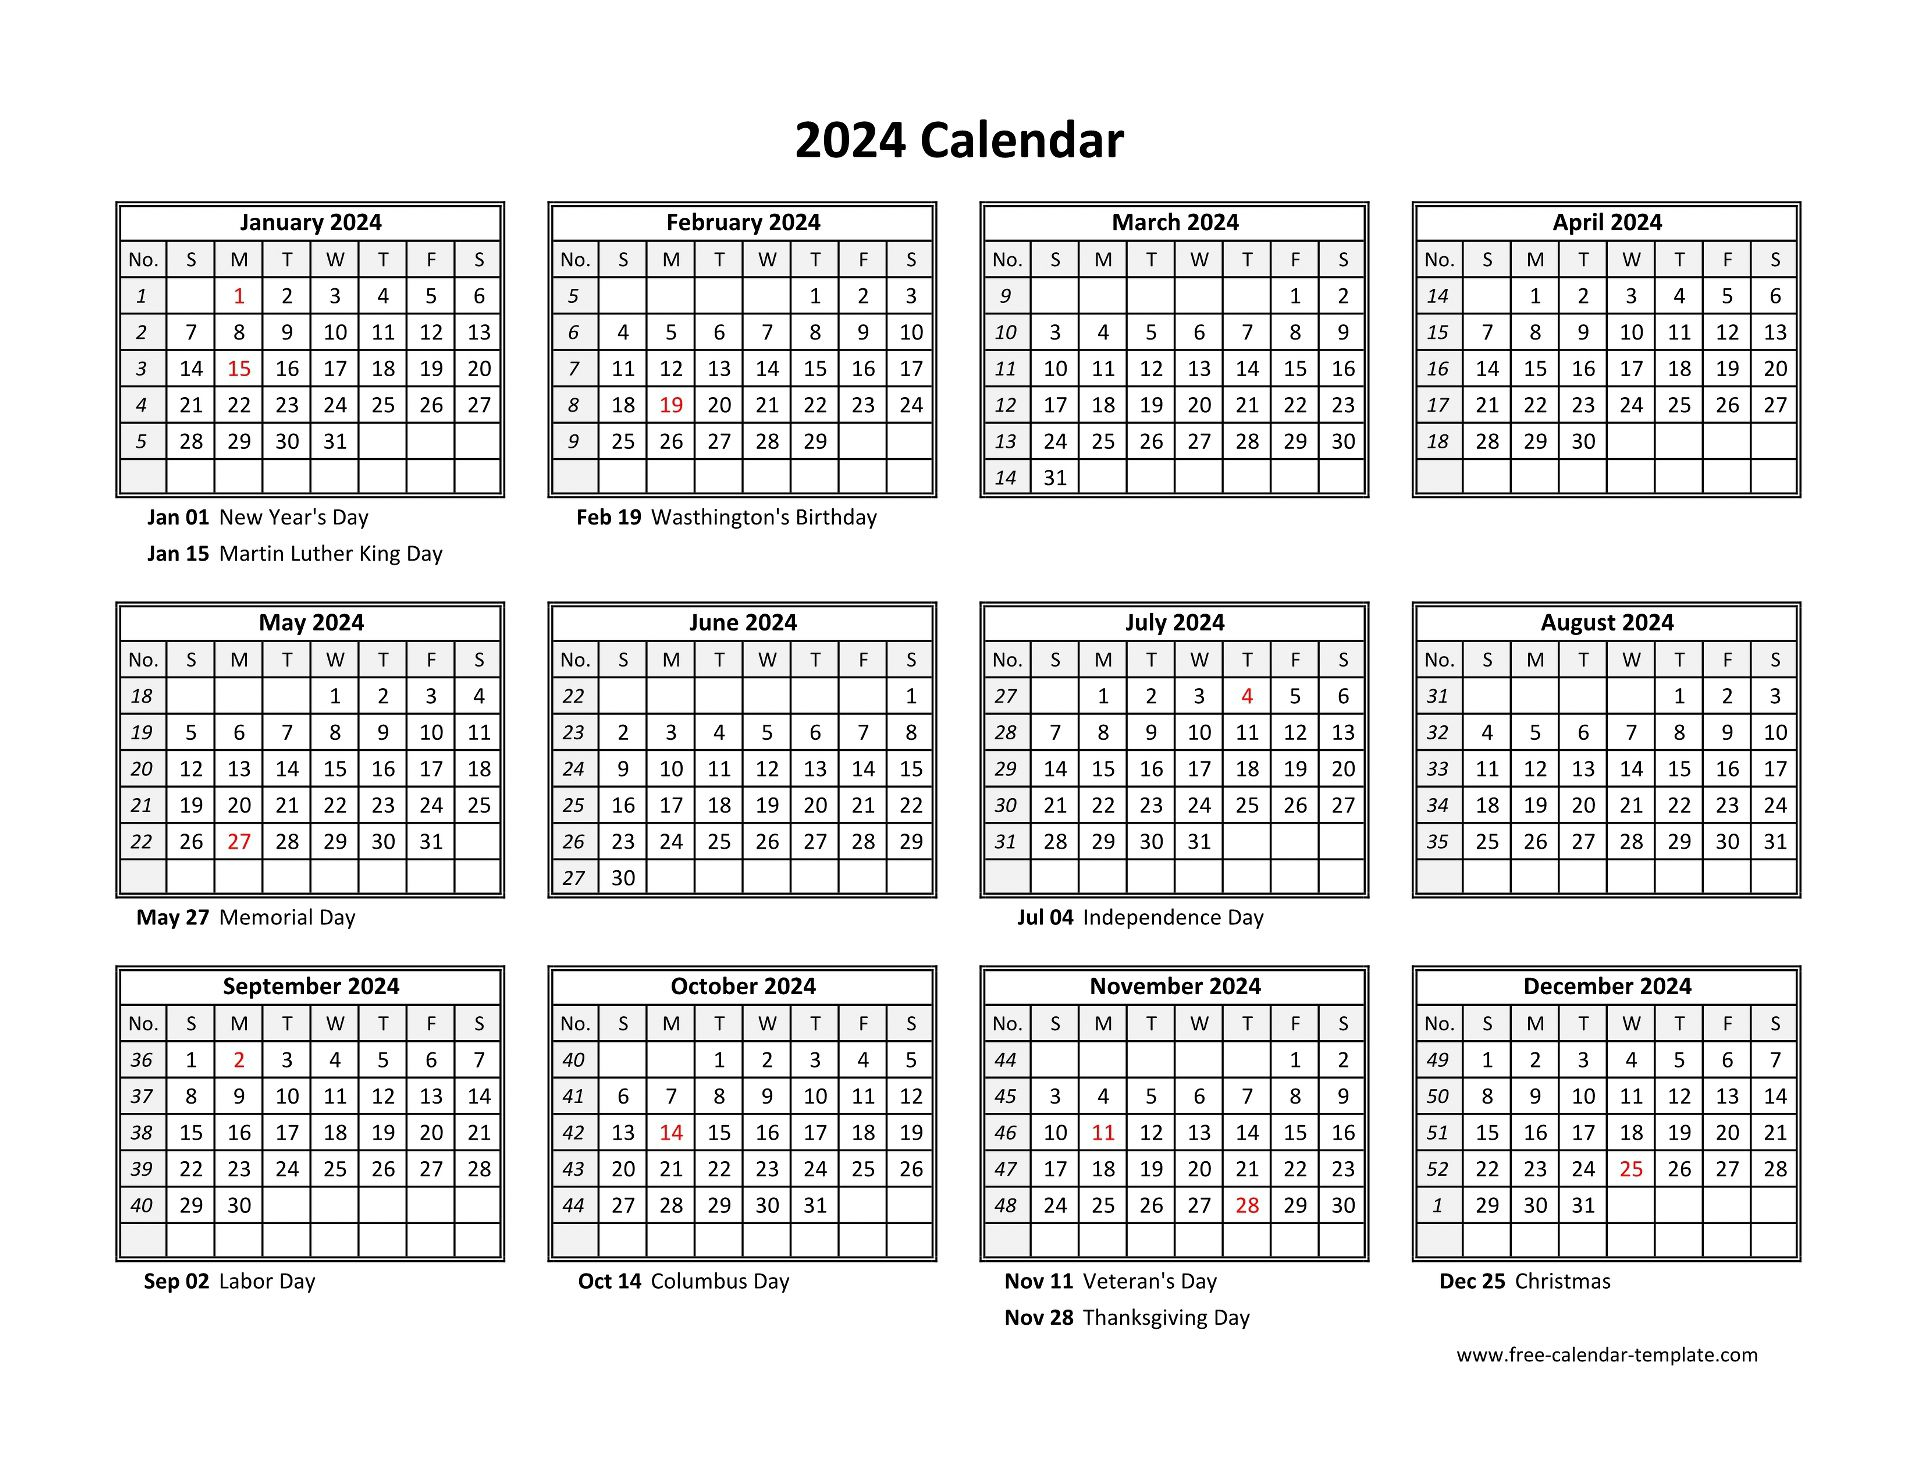 Printable Yearly Calendar 2024 | Free-Calendar-Template for Free Printable 2024 Calendar With Holidays And Observances